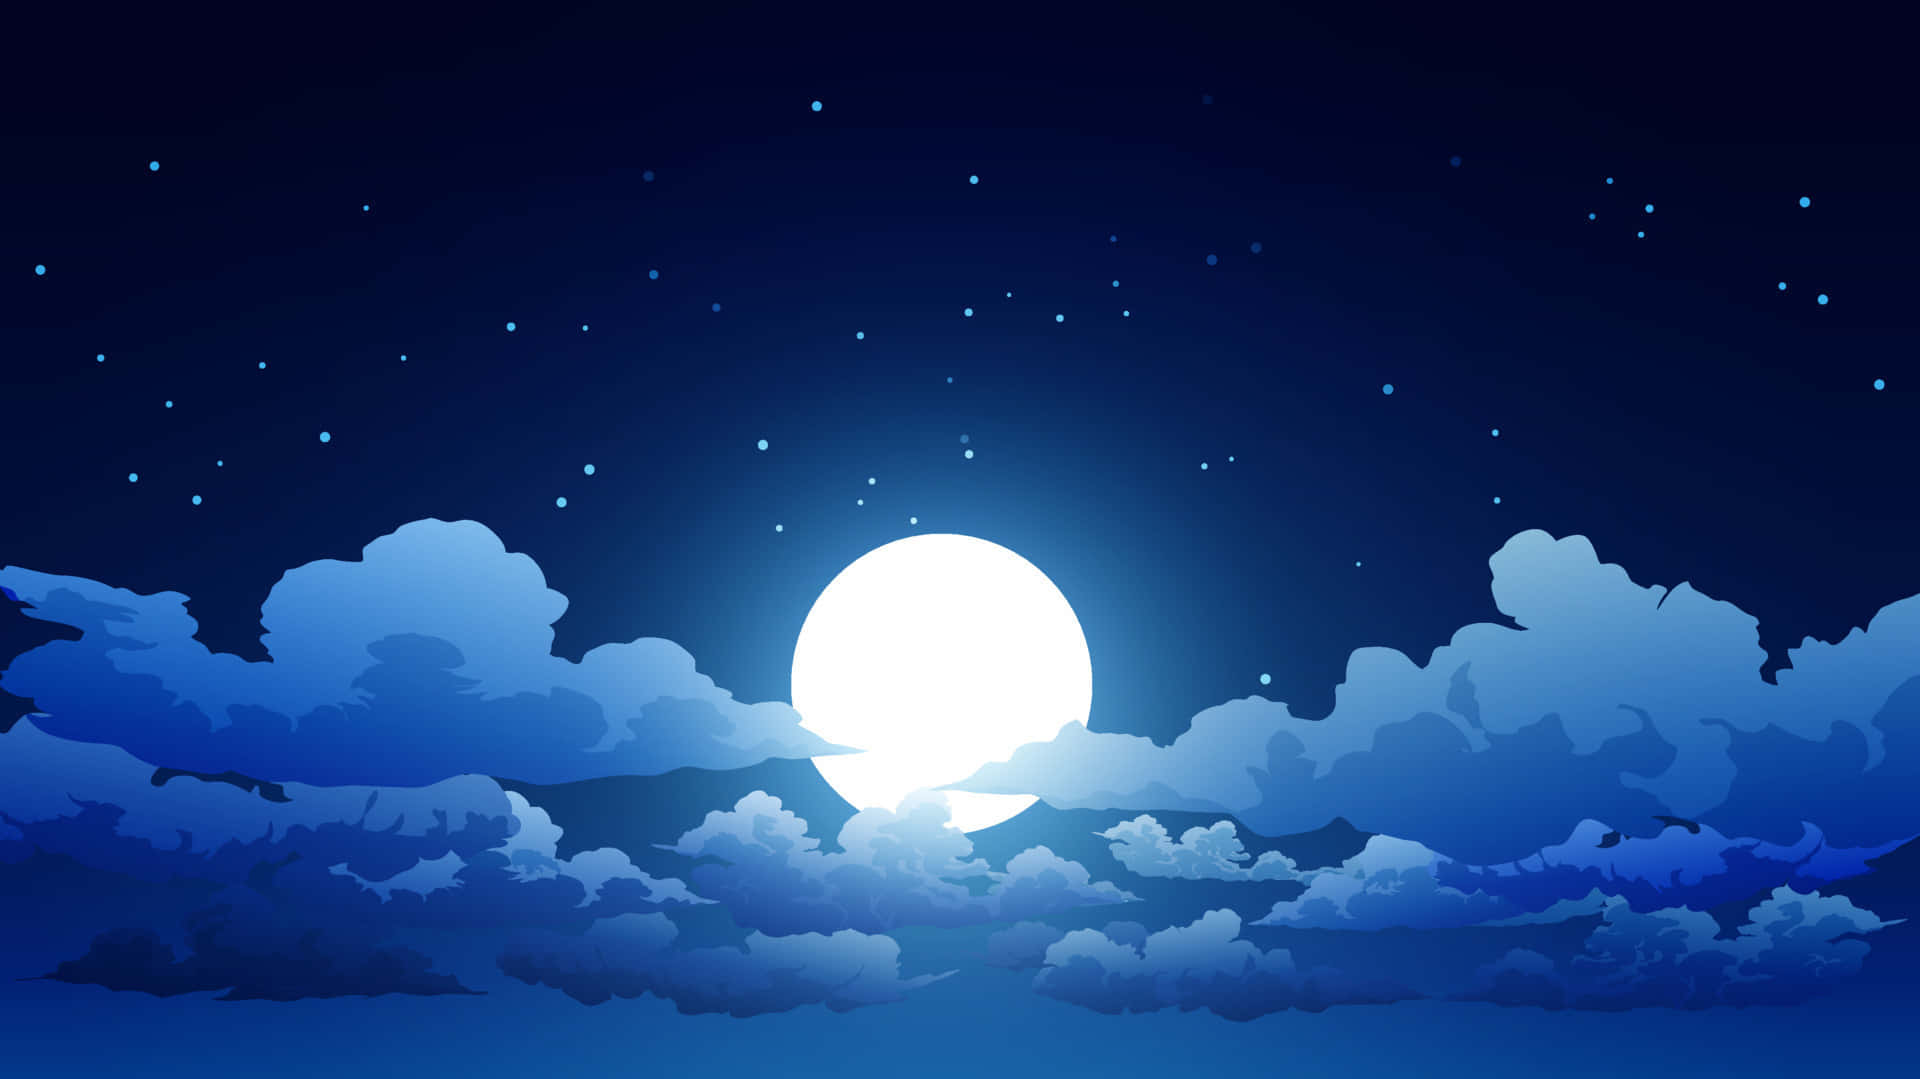 Free Night Sky Moon Wallpaper Downloads, [100+] Night Sky Moon Wallpapers  for FREE 